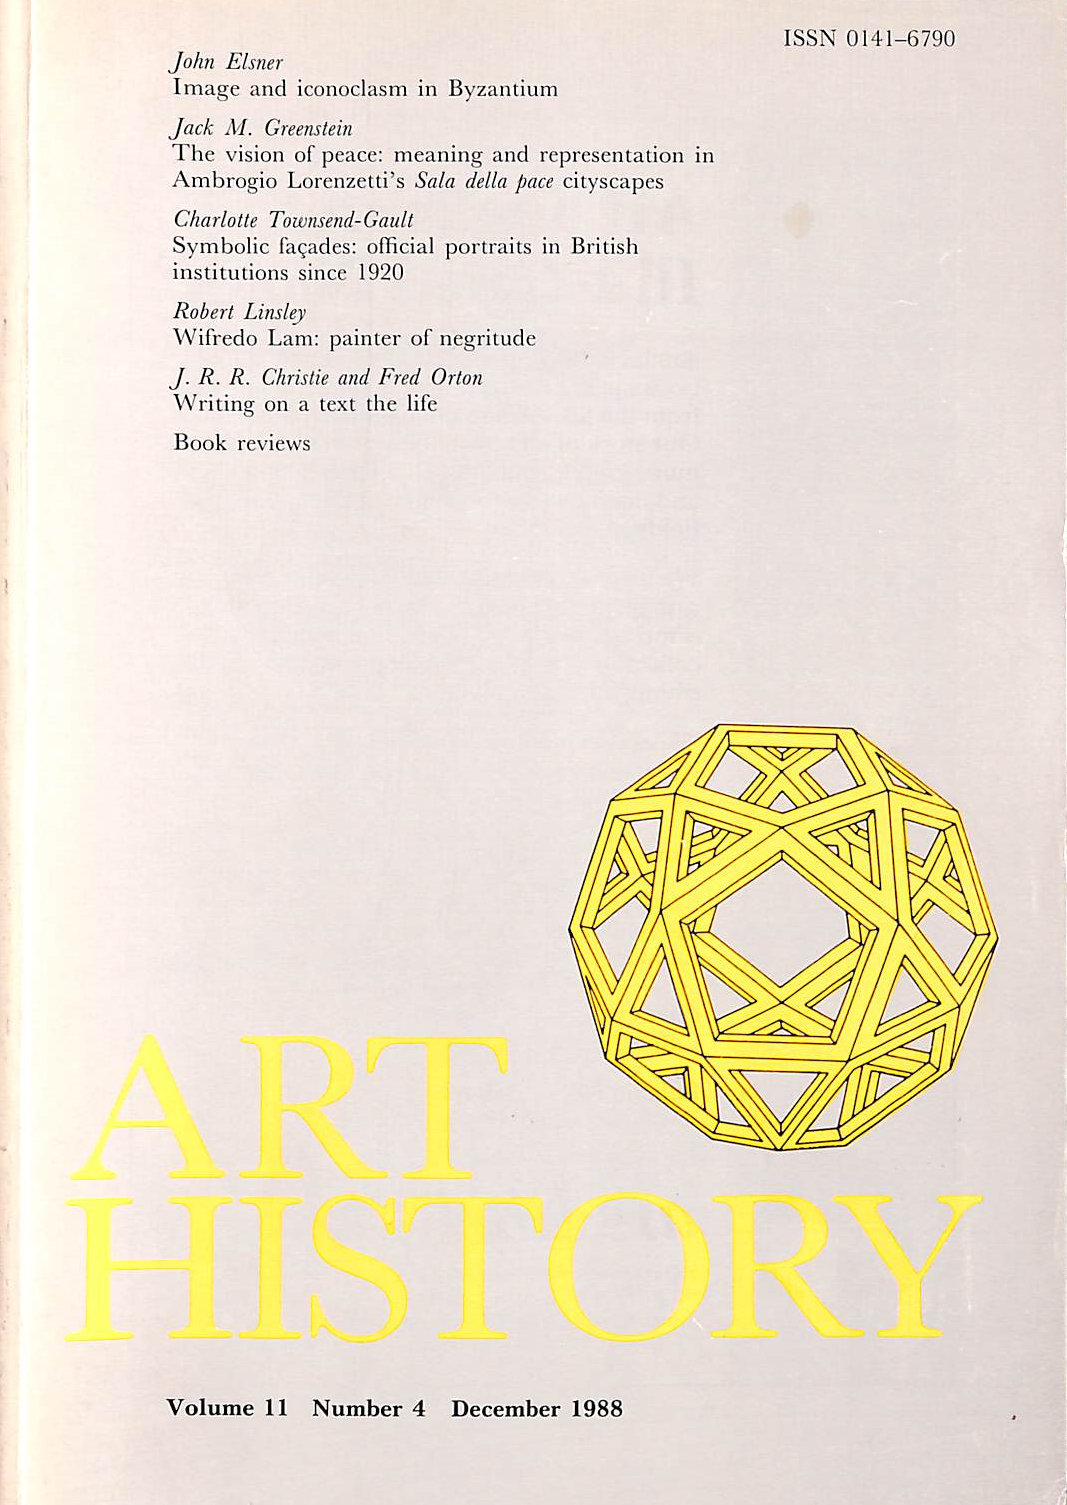 MCWILLIAM, NEIL (ED.) - Art History, Journal of the Association of Art Historians: Volume 11, Number 4, December 1988